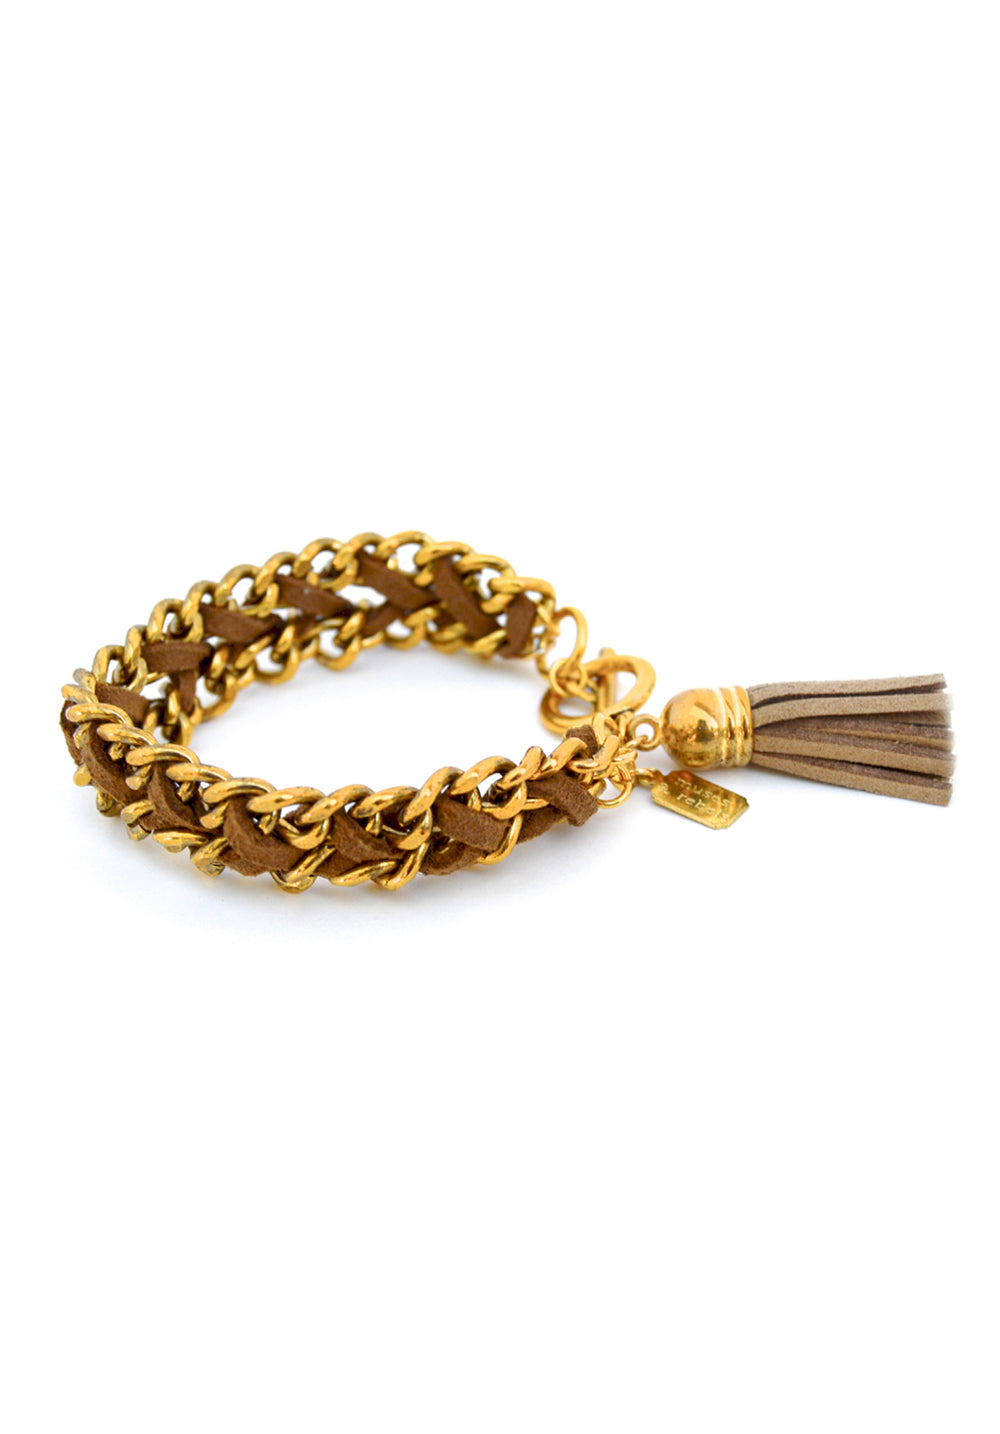 suede tassel bracelet - whiskey gold